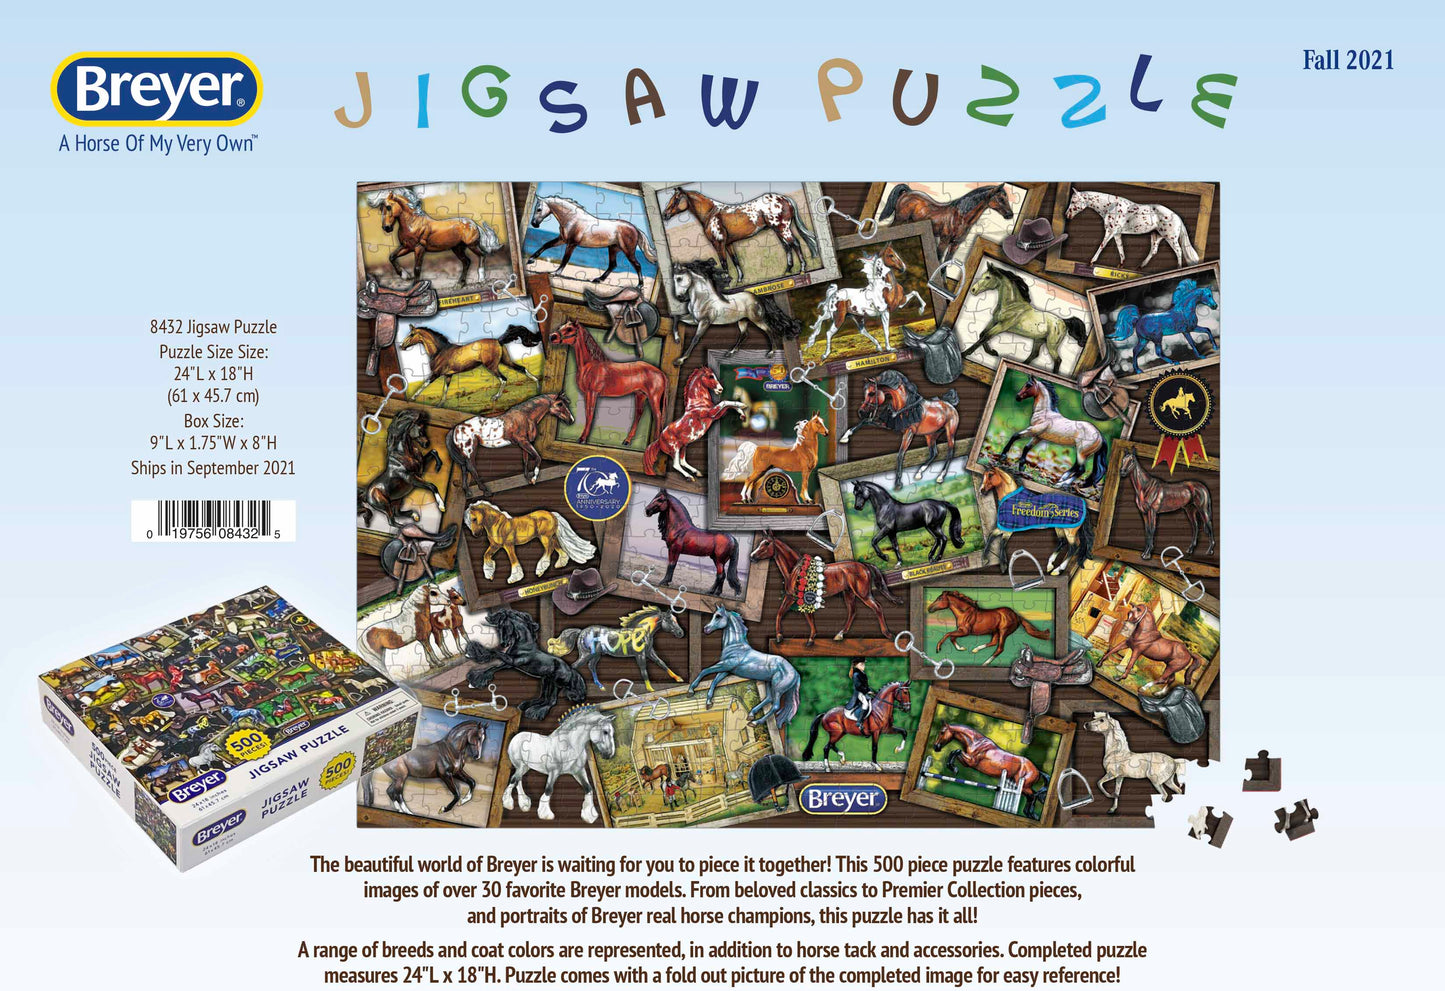 Breyer 500 piece puzzle